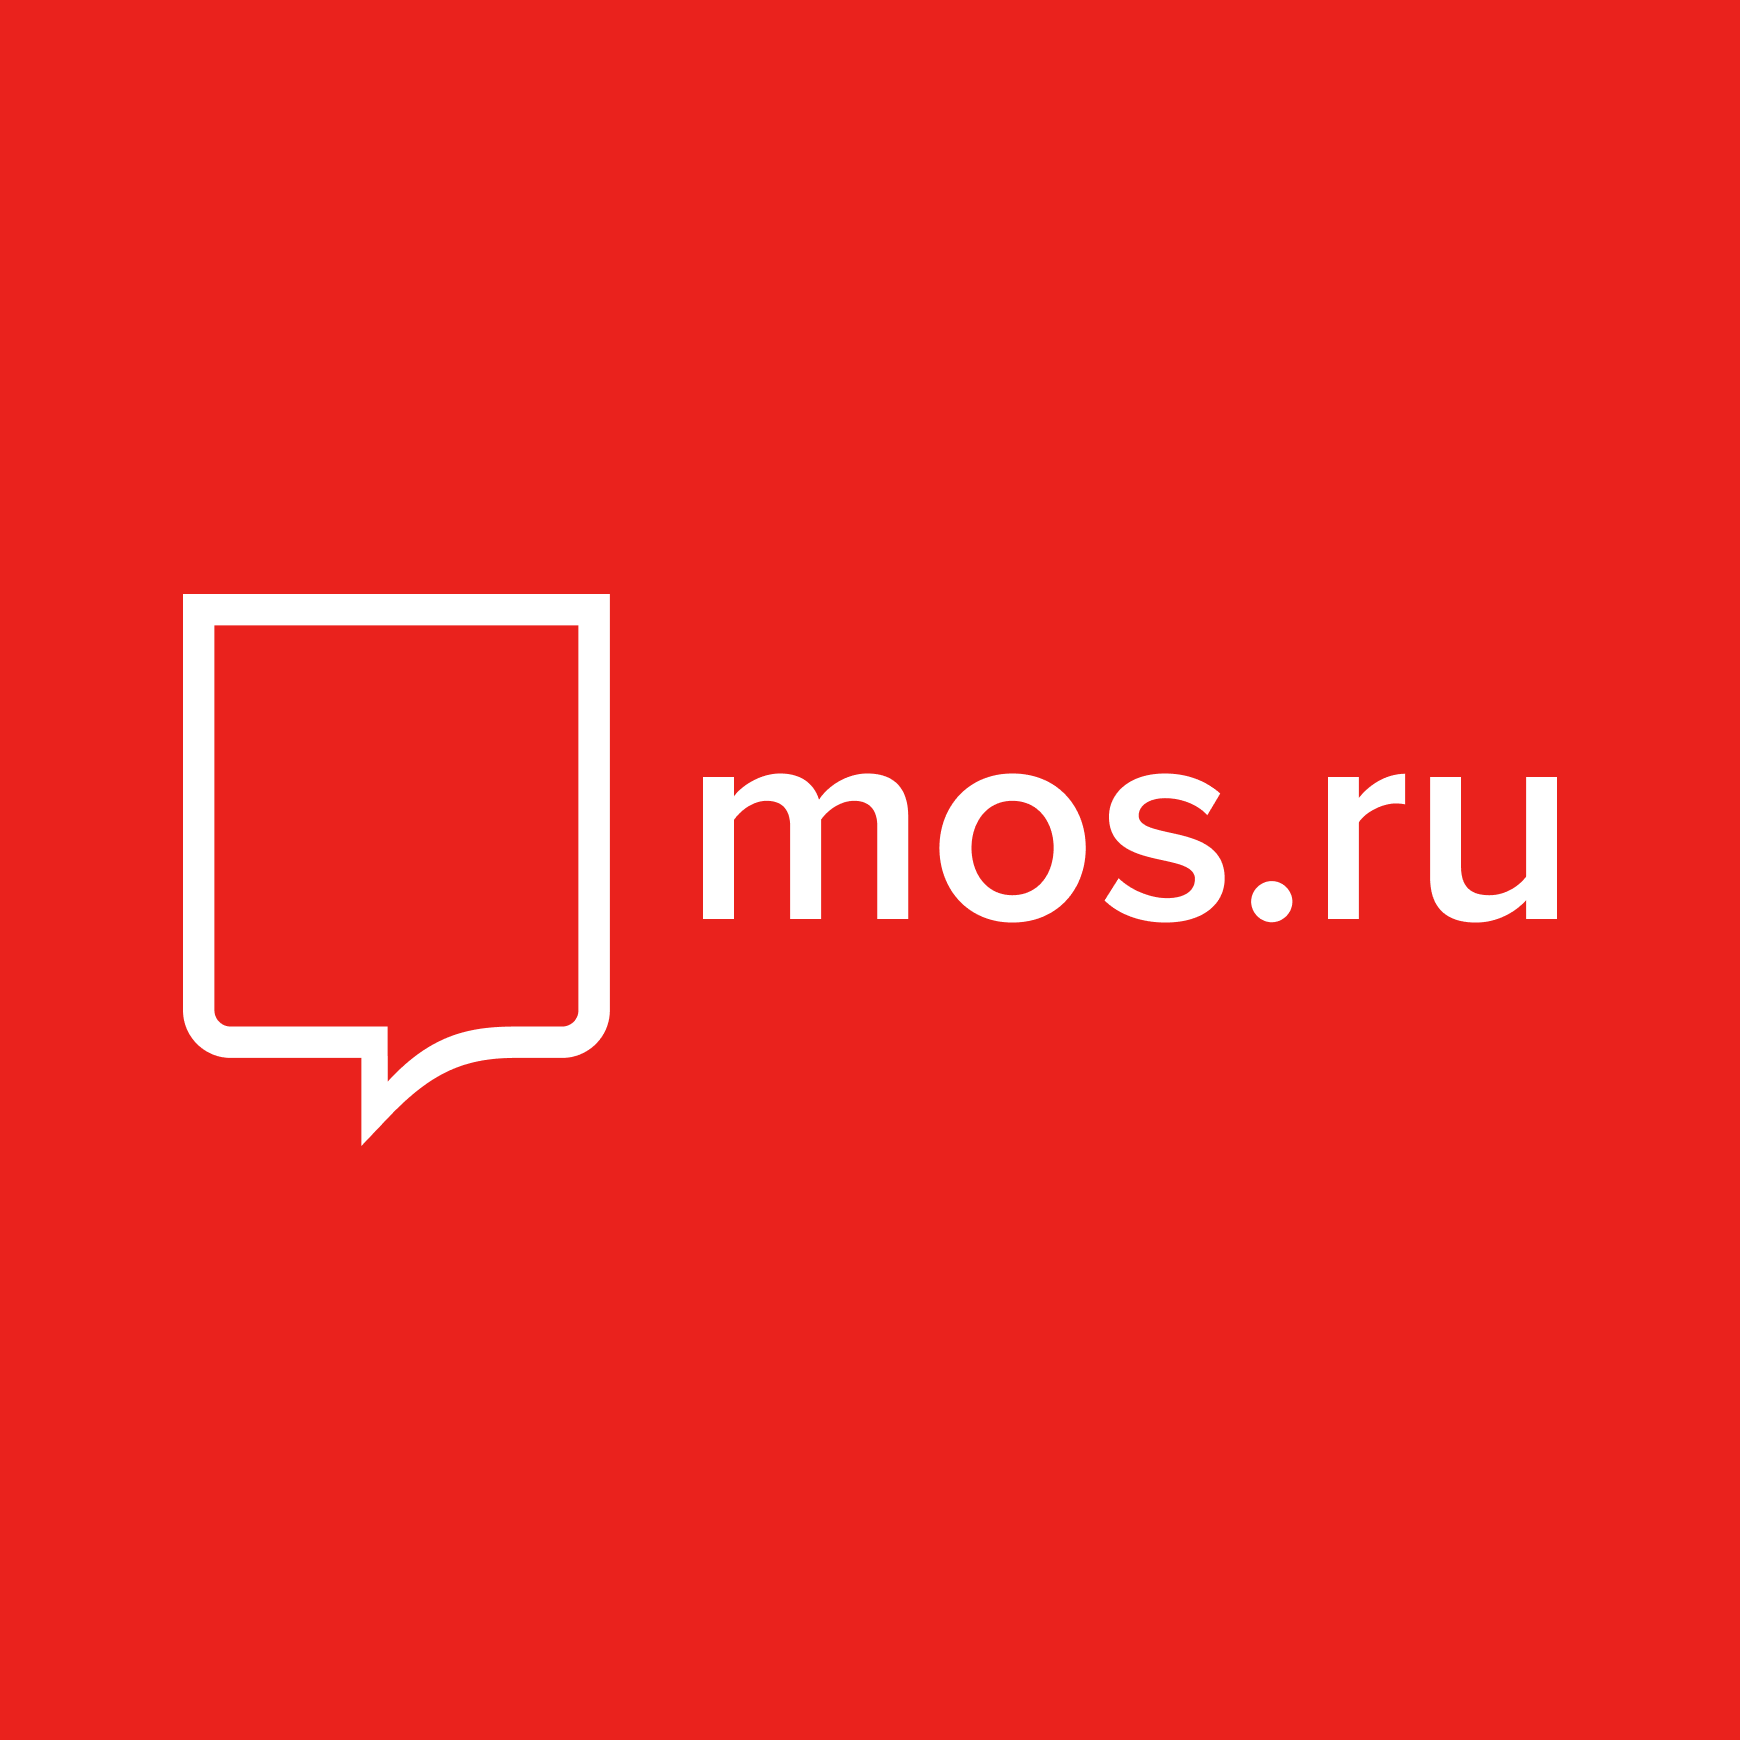 Мос ру. Mos.ru лого. Мос ру иконка. Mтс ру. Б mos ru